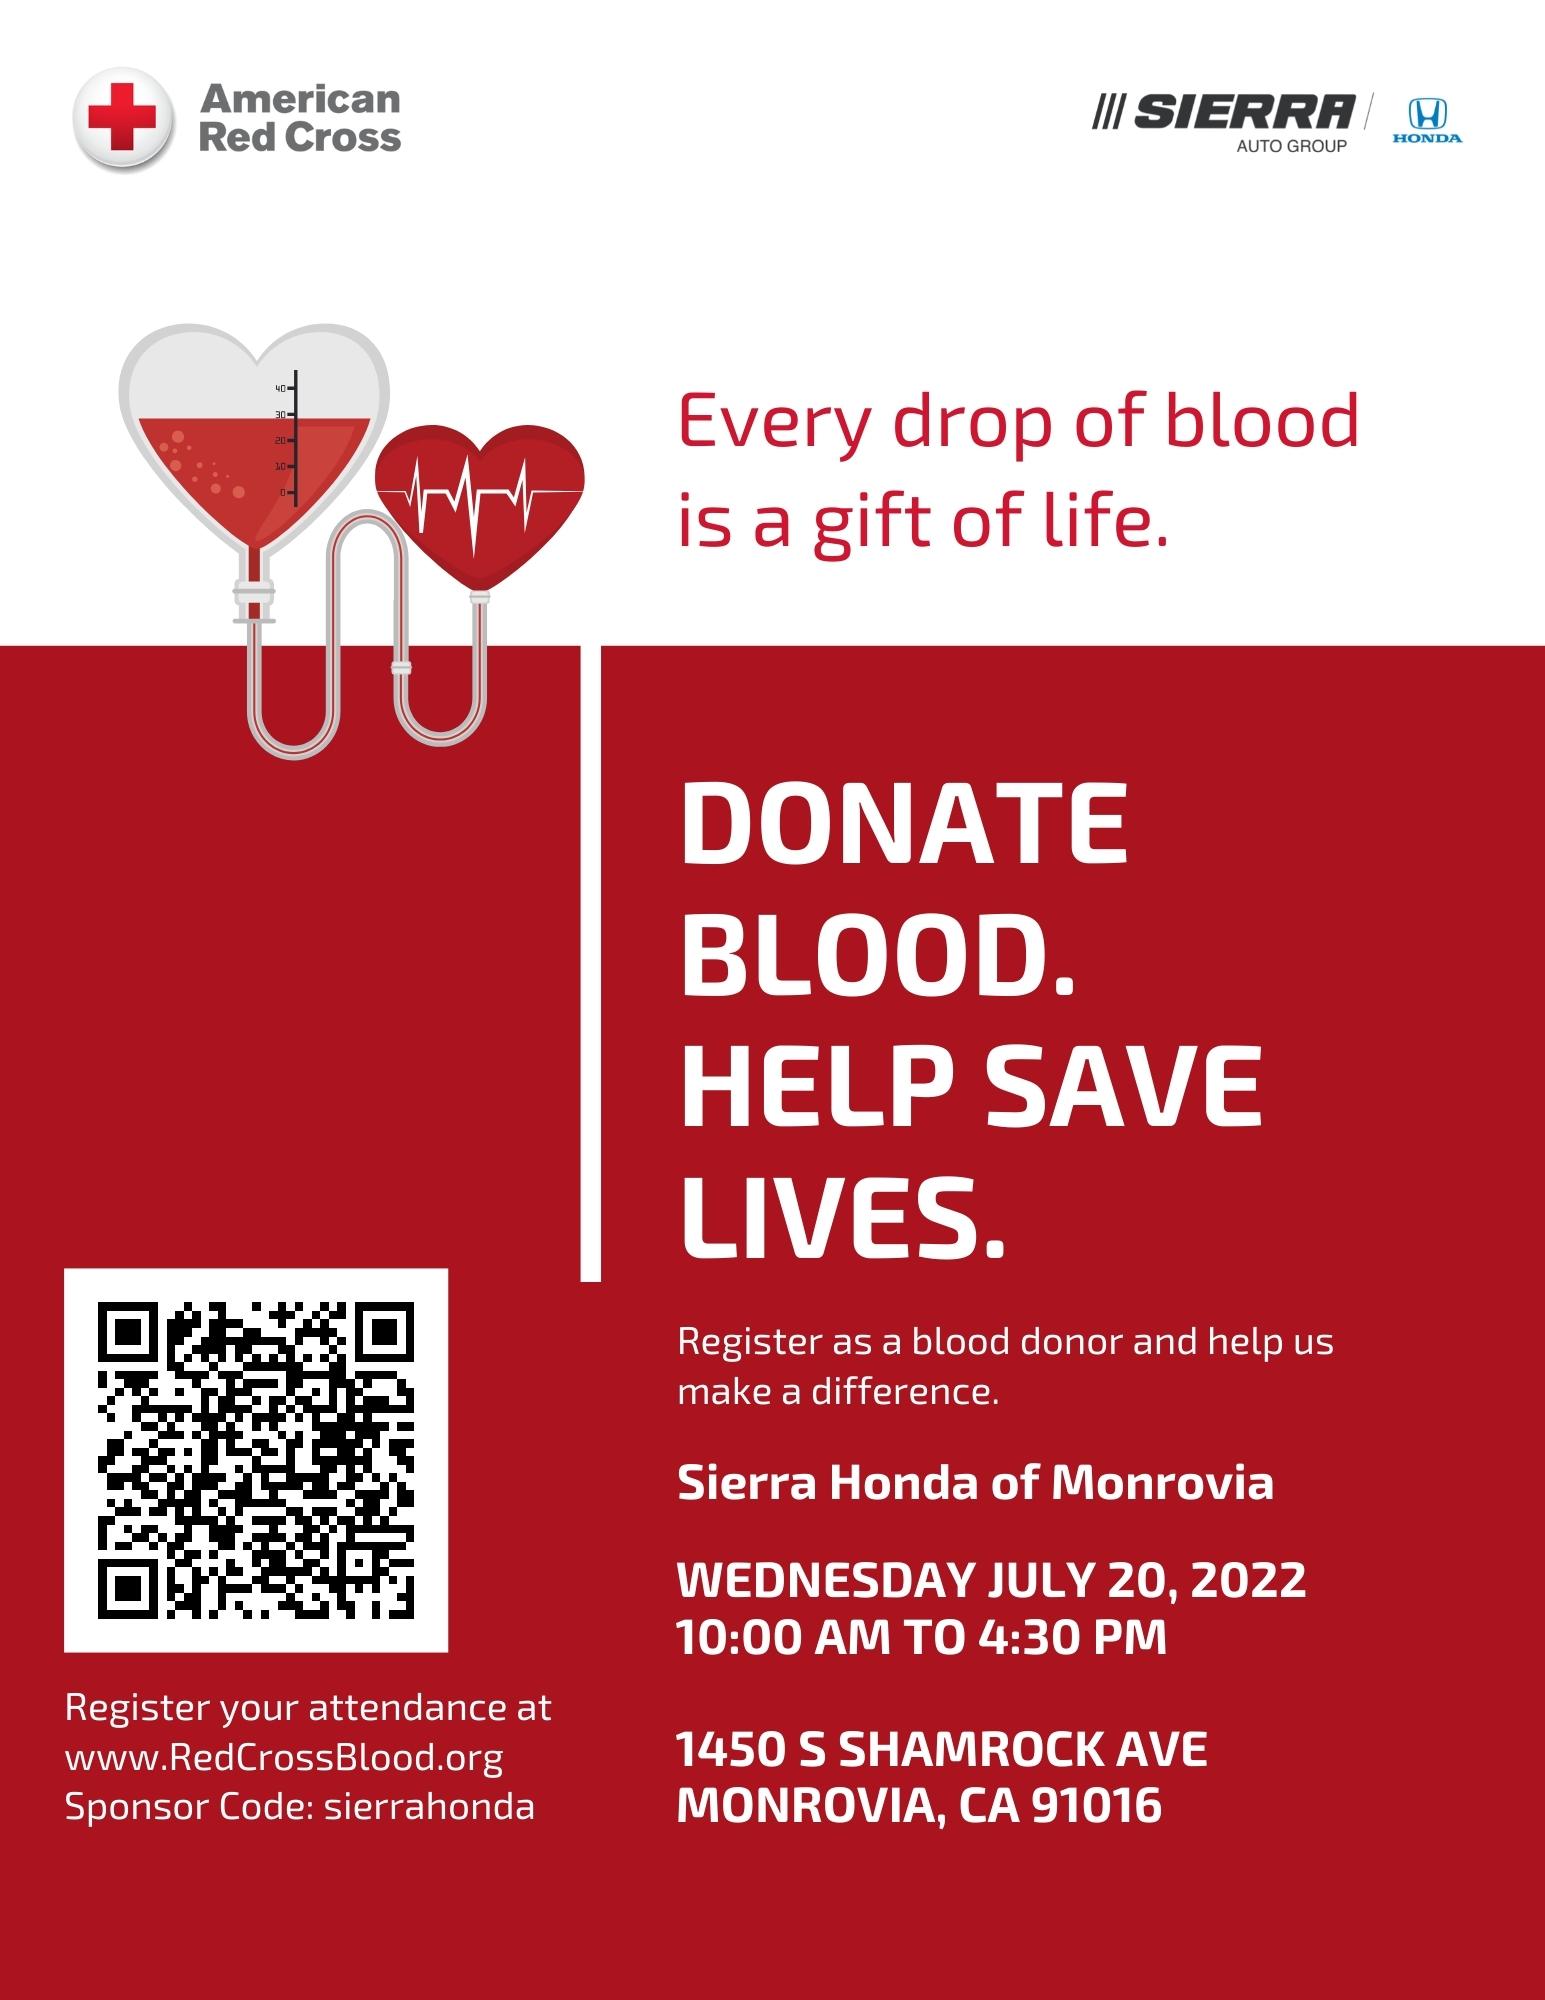 Sierra Honda of Monrovia hosts Blood Drive